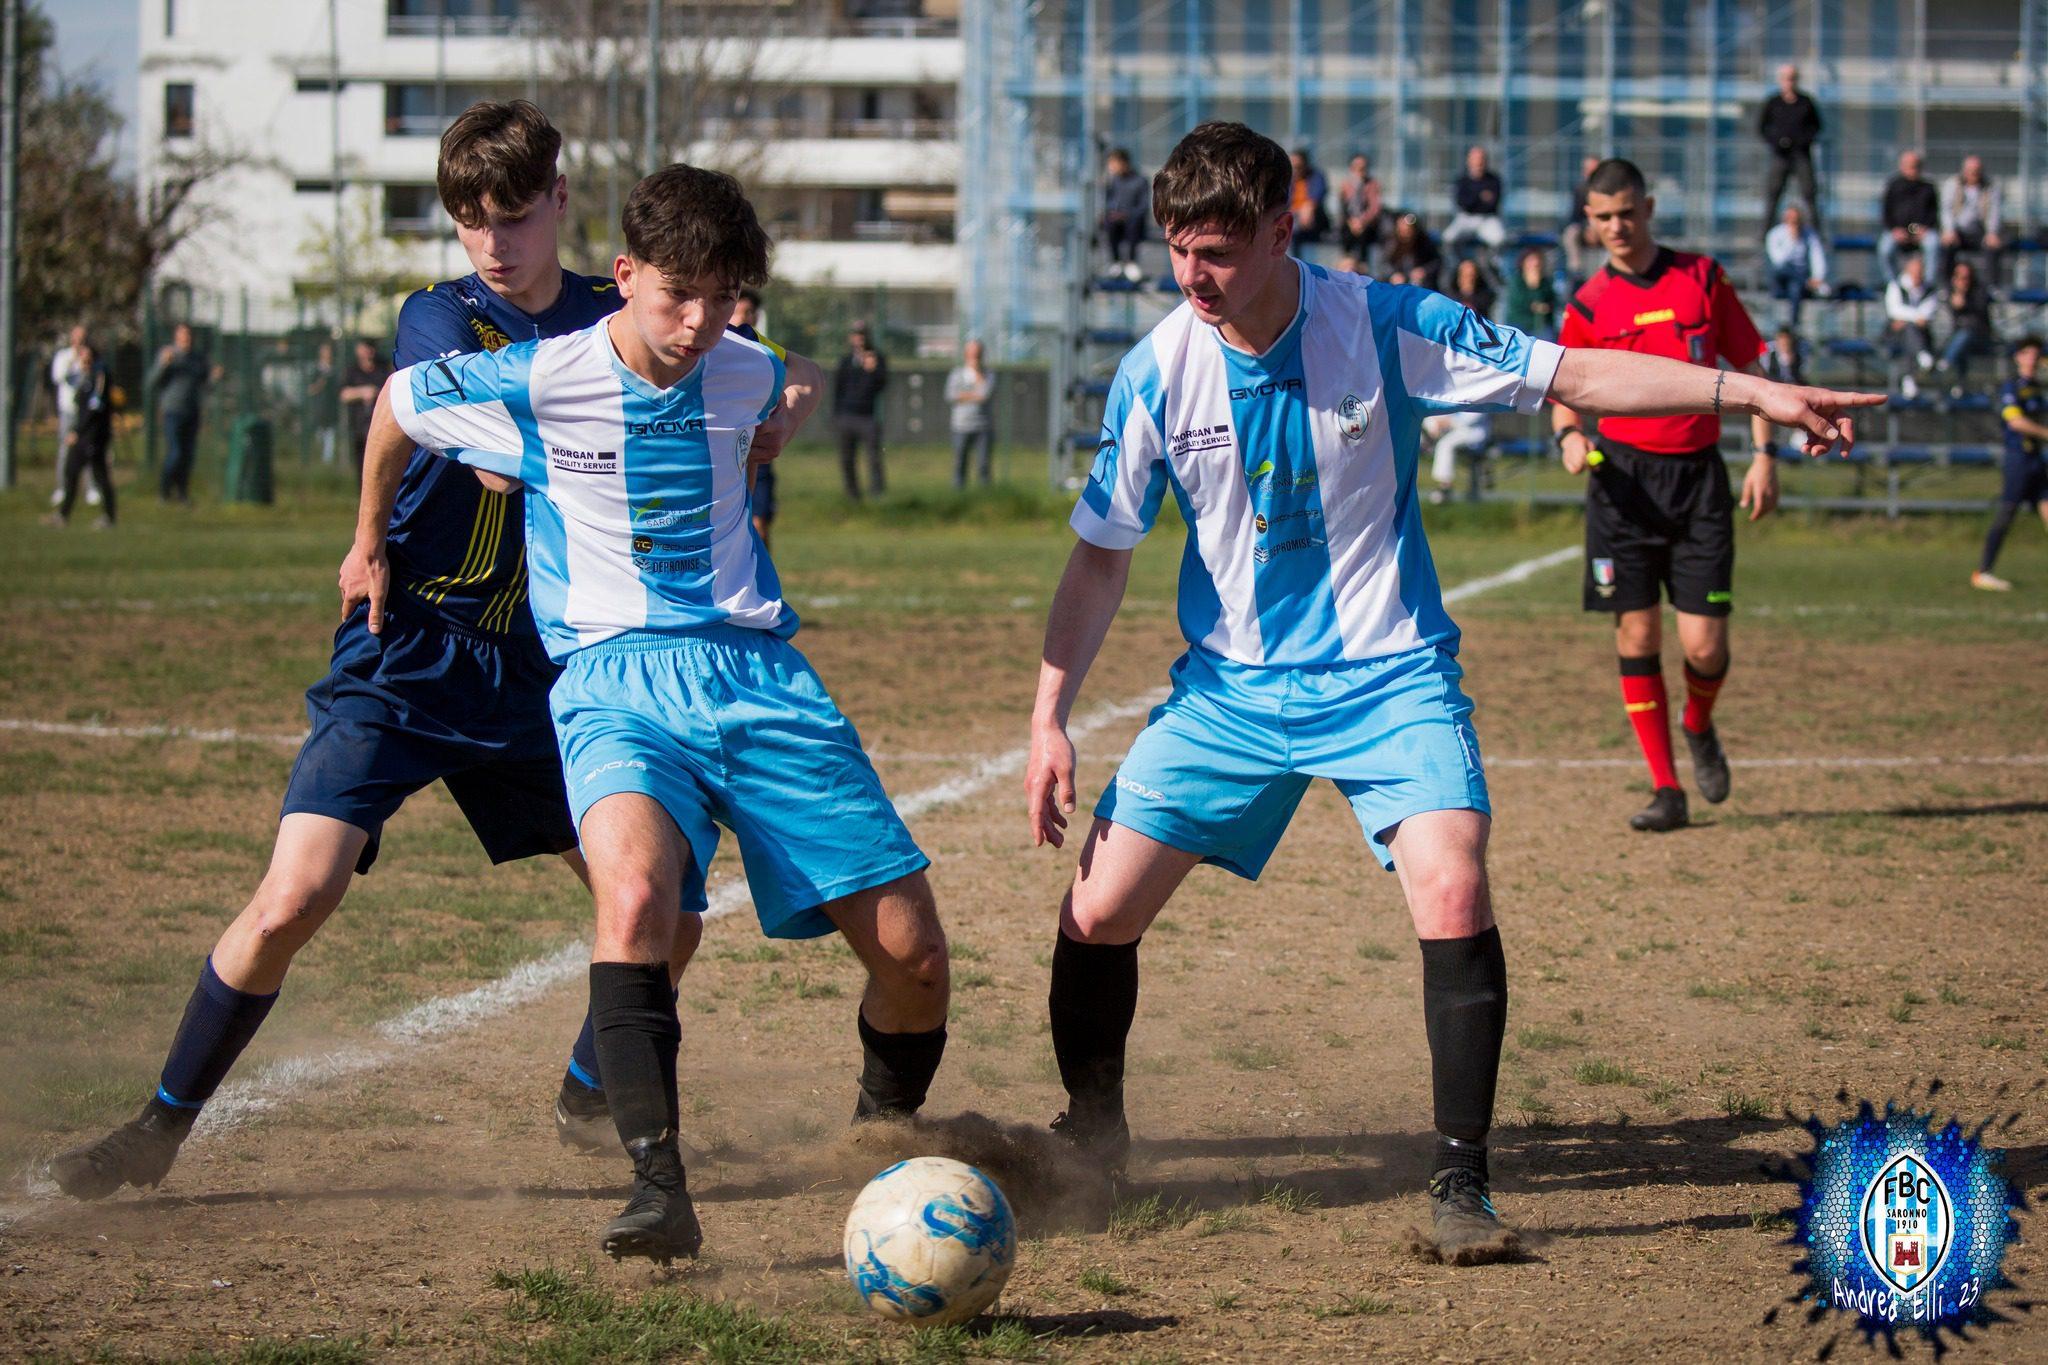 Calcio juniores, finali playoff: Fbc Saronno-Grentarcadia in diretta